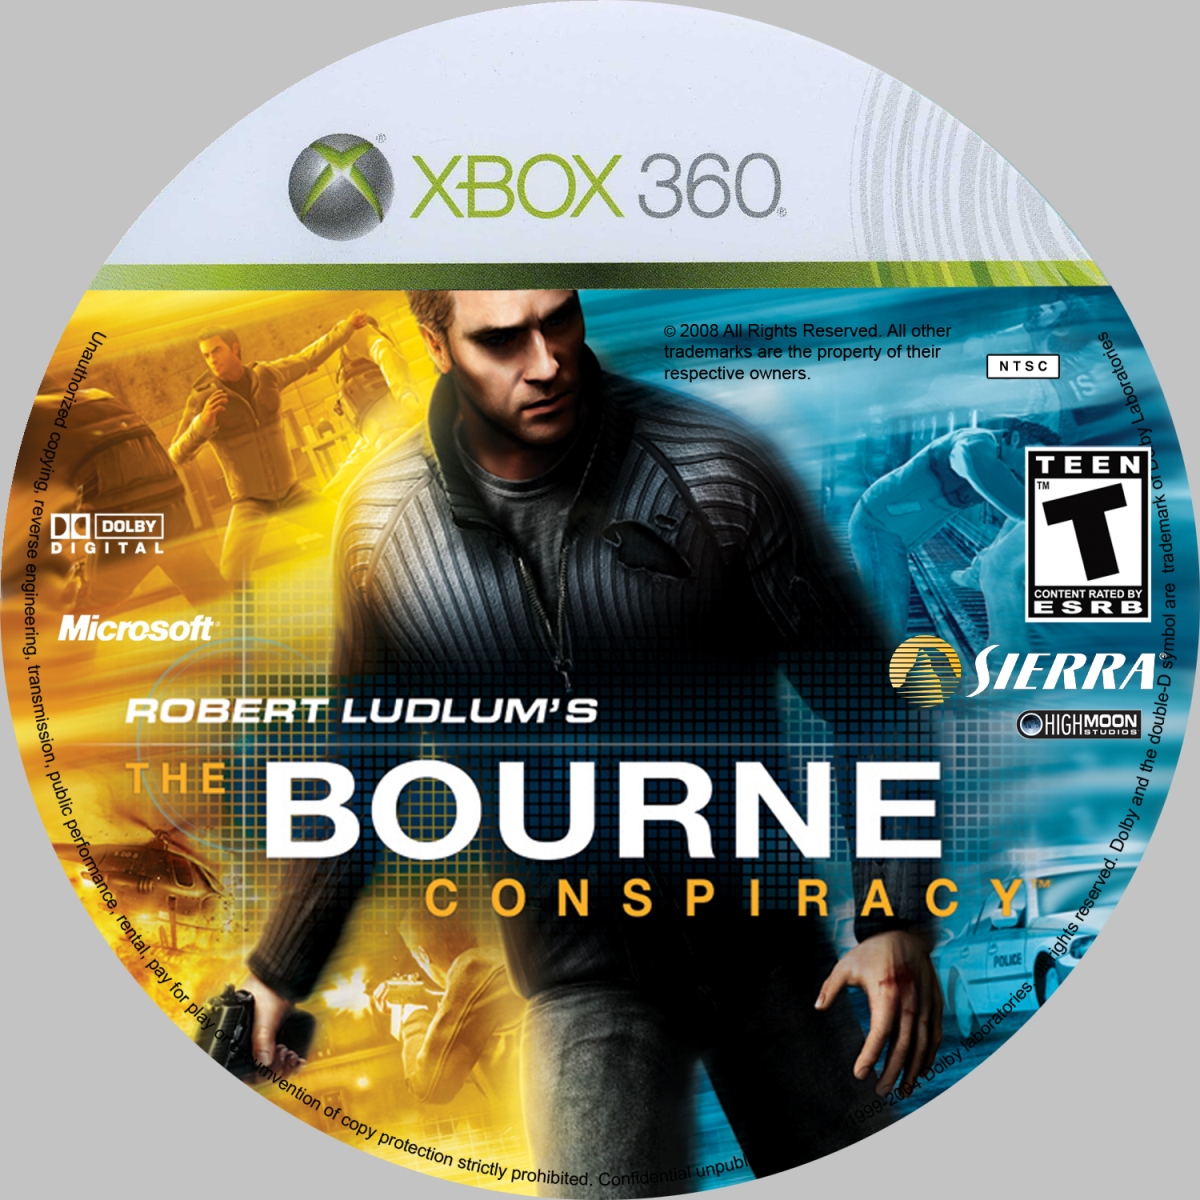 Xbox 360 the Bourne Conspiracy обложки. Robert Ludlum's the Bourne Conspiracy обложка. Robert Ludlum's the Bourne Conspiracy ps3 обложка. Ps3 Rus обложка the Bourne Conspiracy Full.